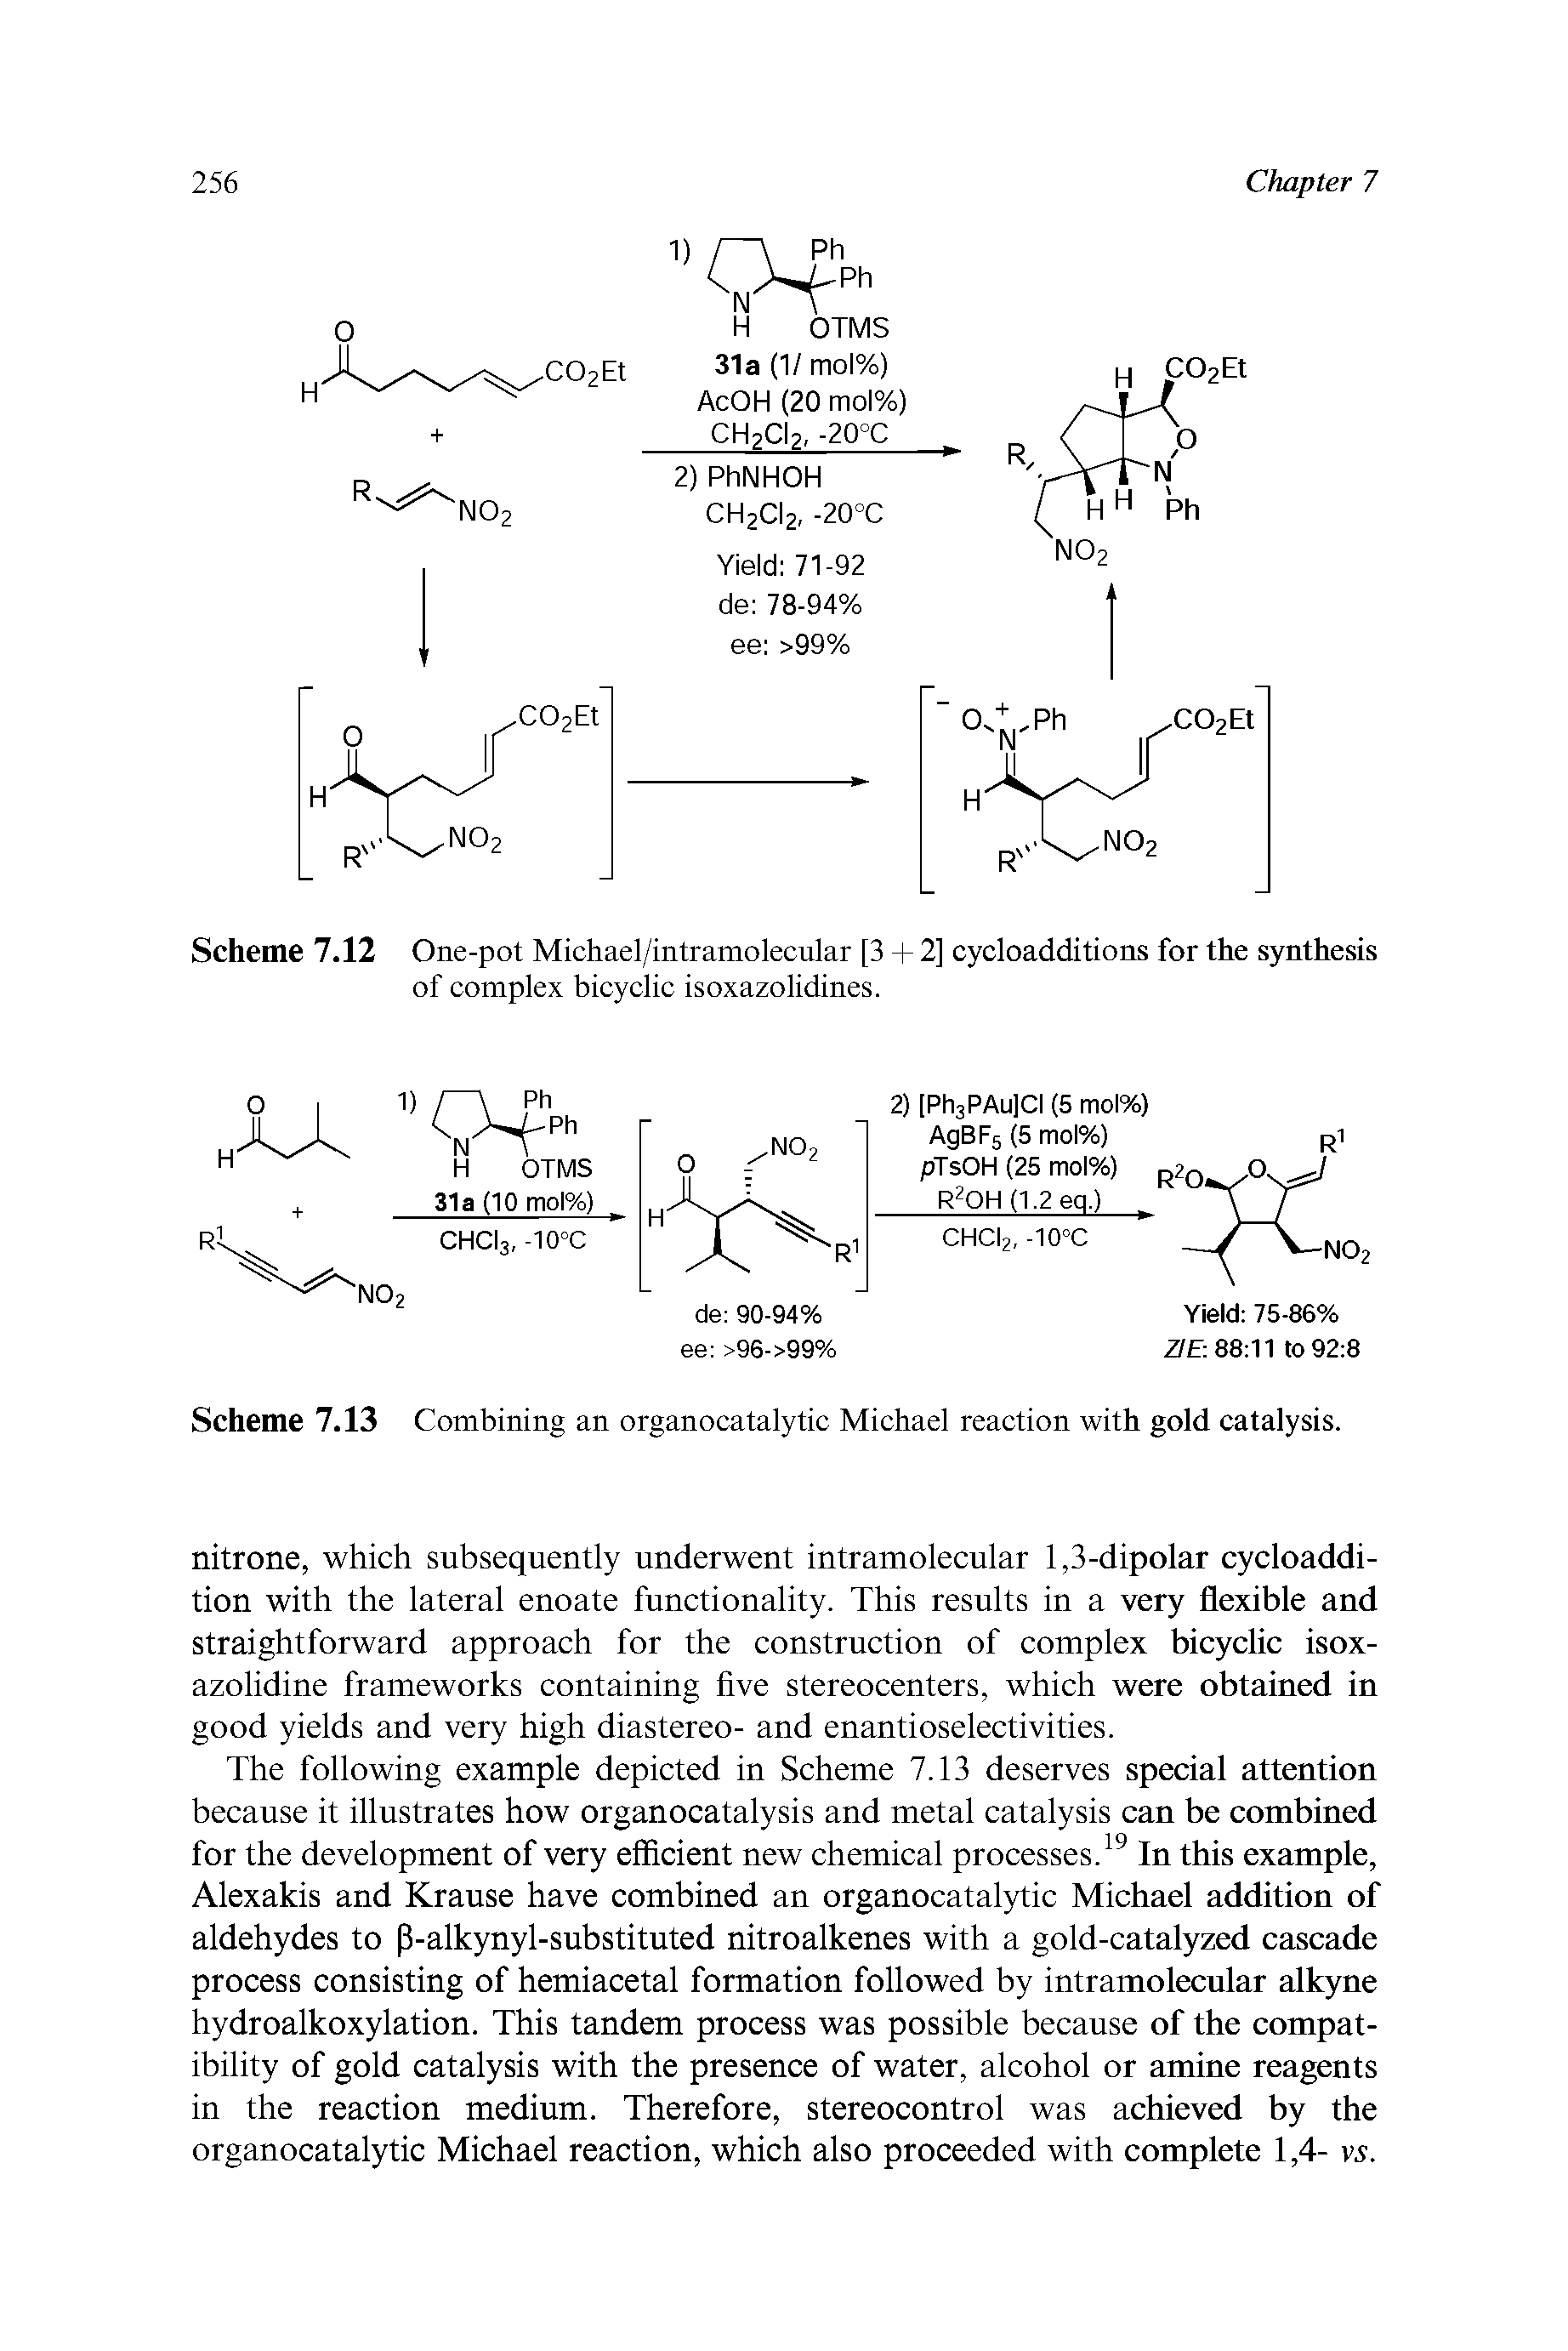 Scheme 7.13 Combining an organocatalytic Michael reaction with gold catalysis.